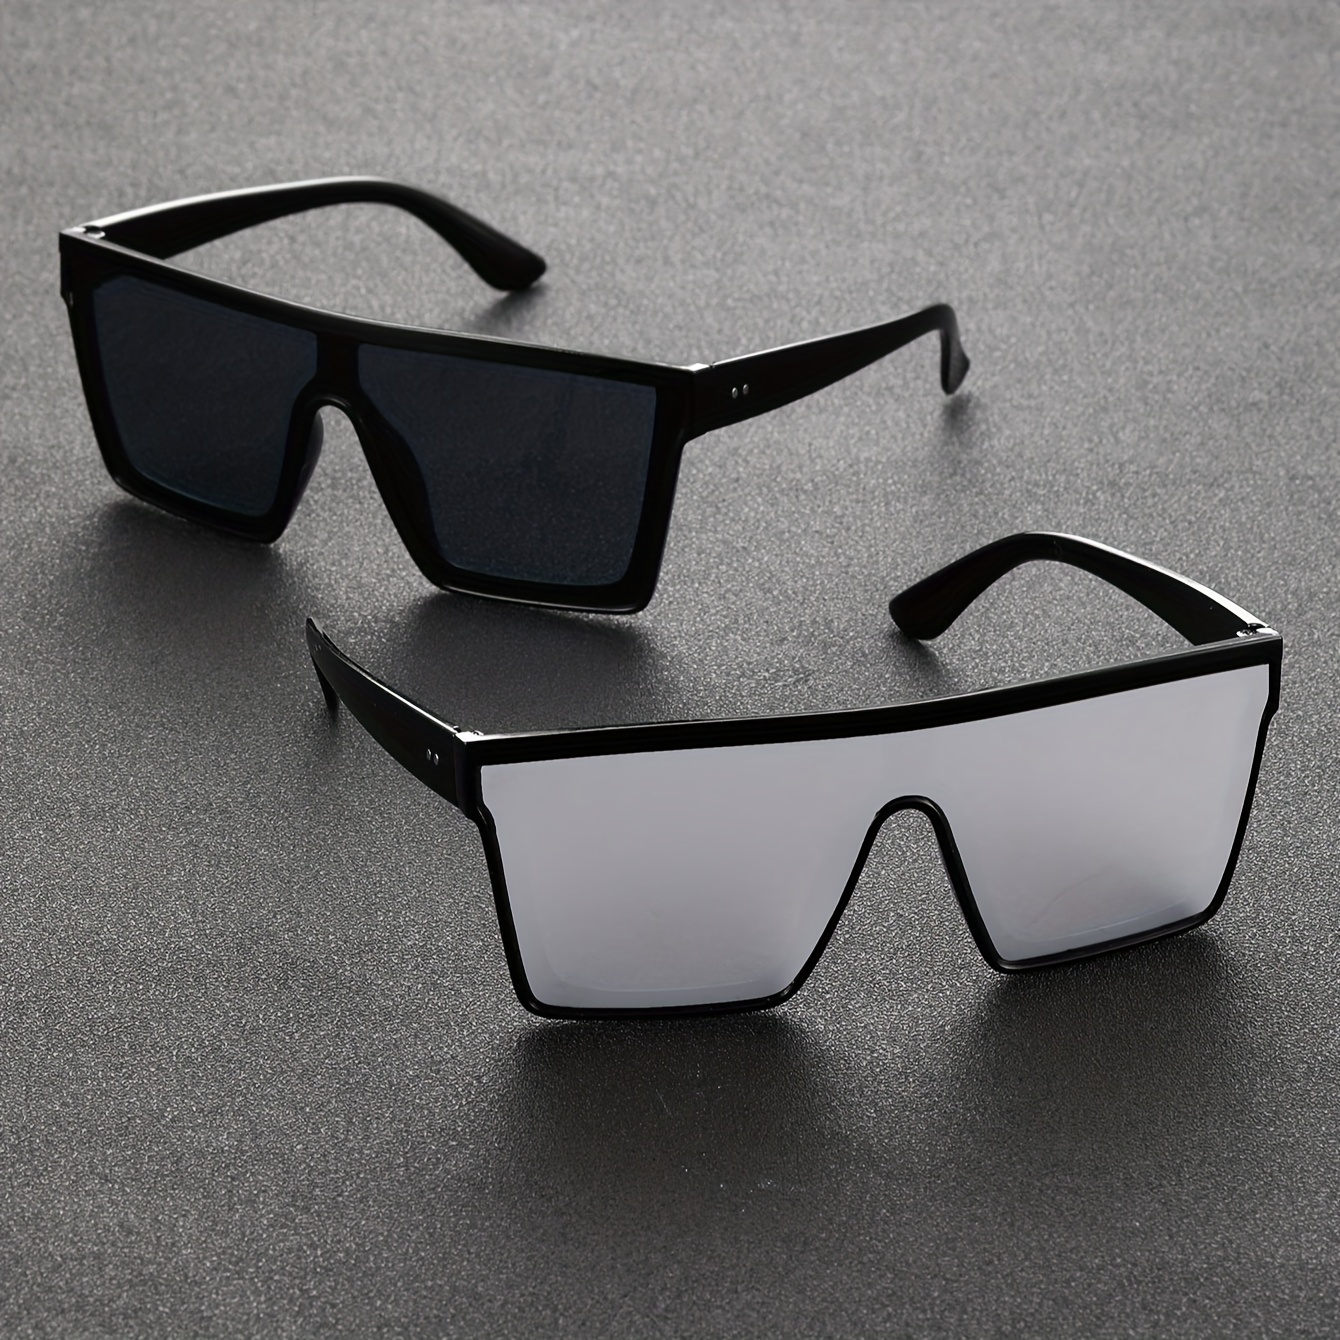 

2pairs Men's Fashion Casual Travel Versatile Glasses